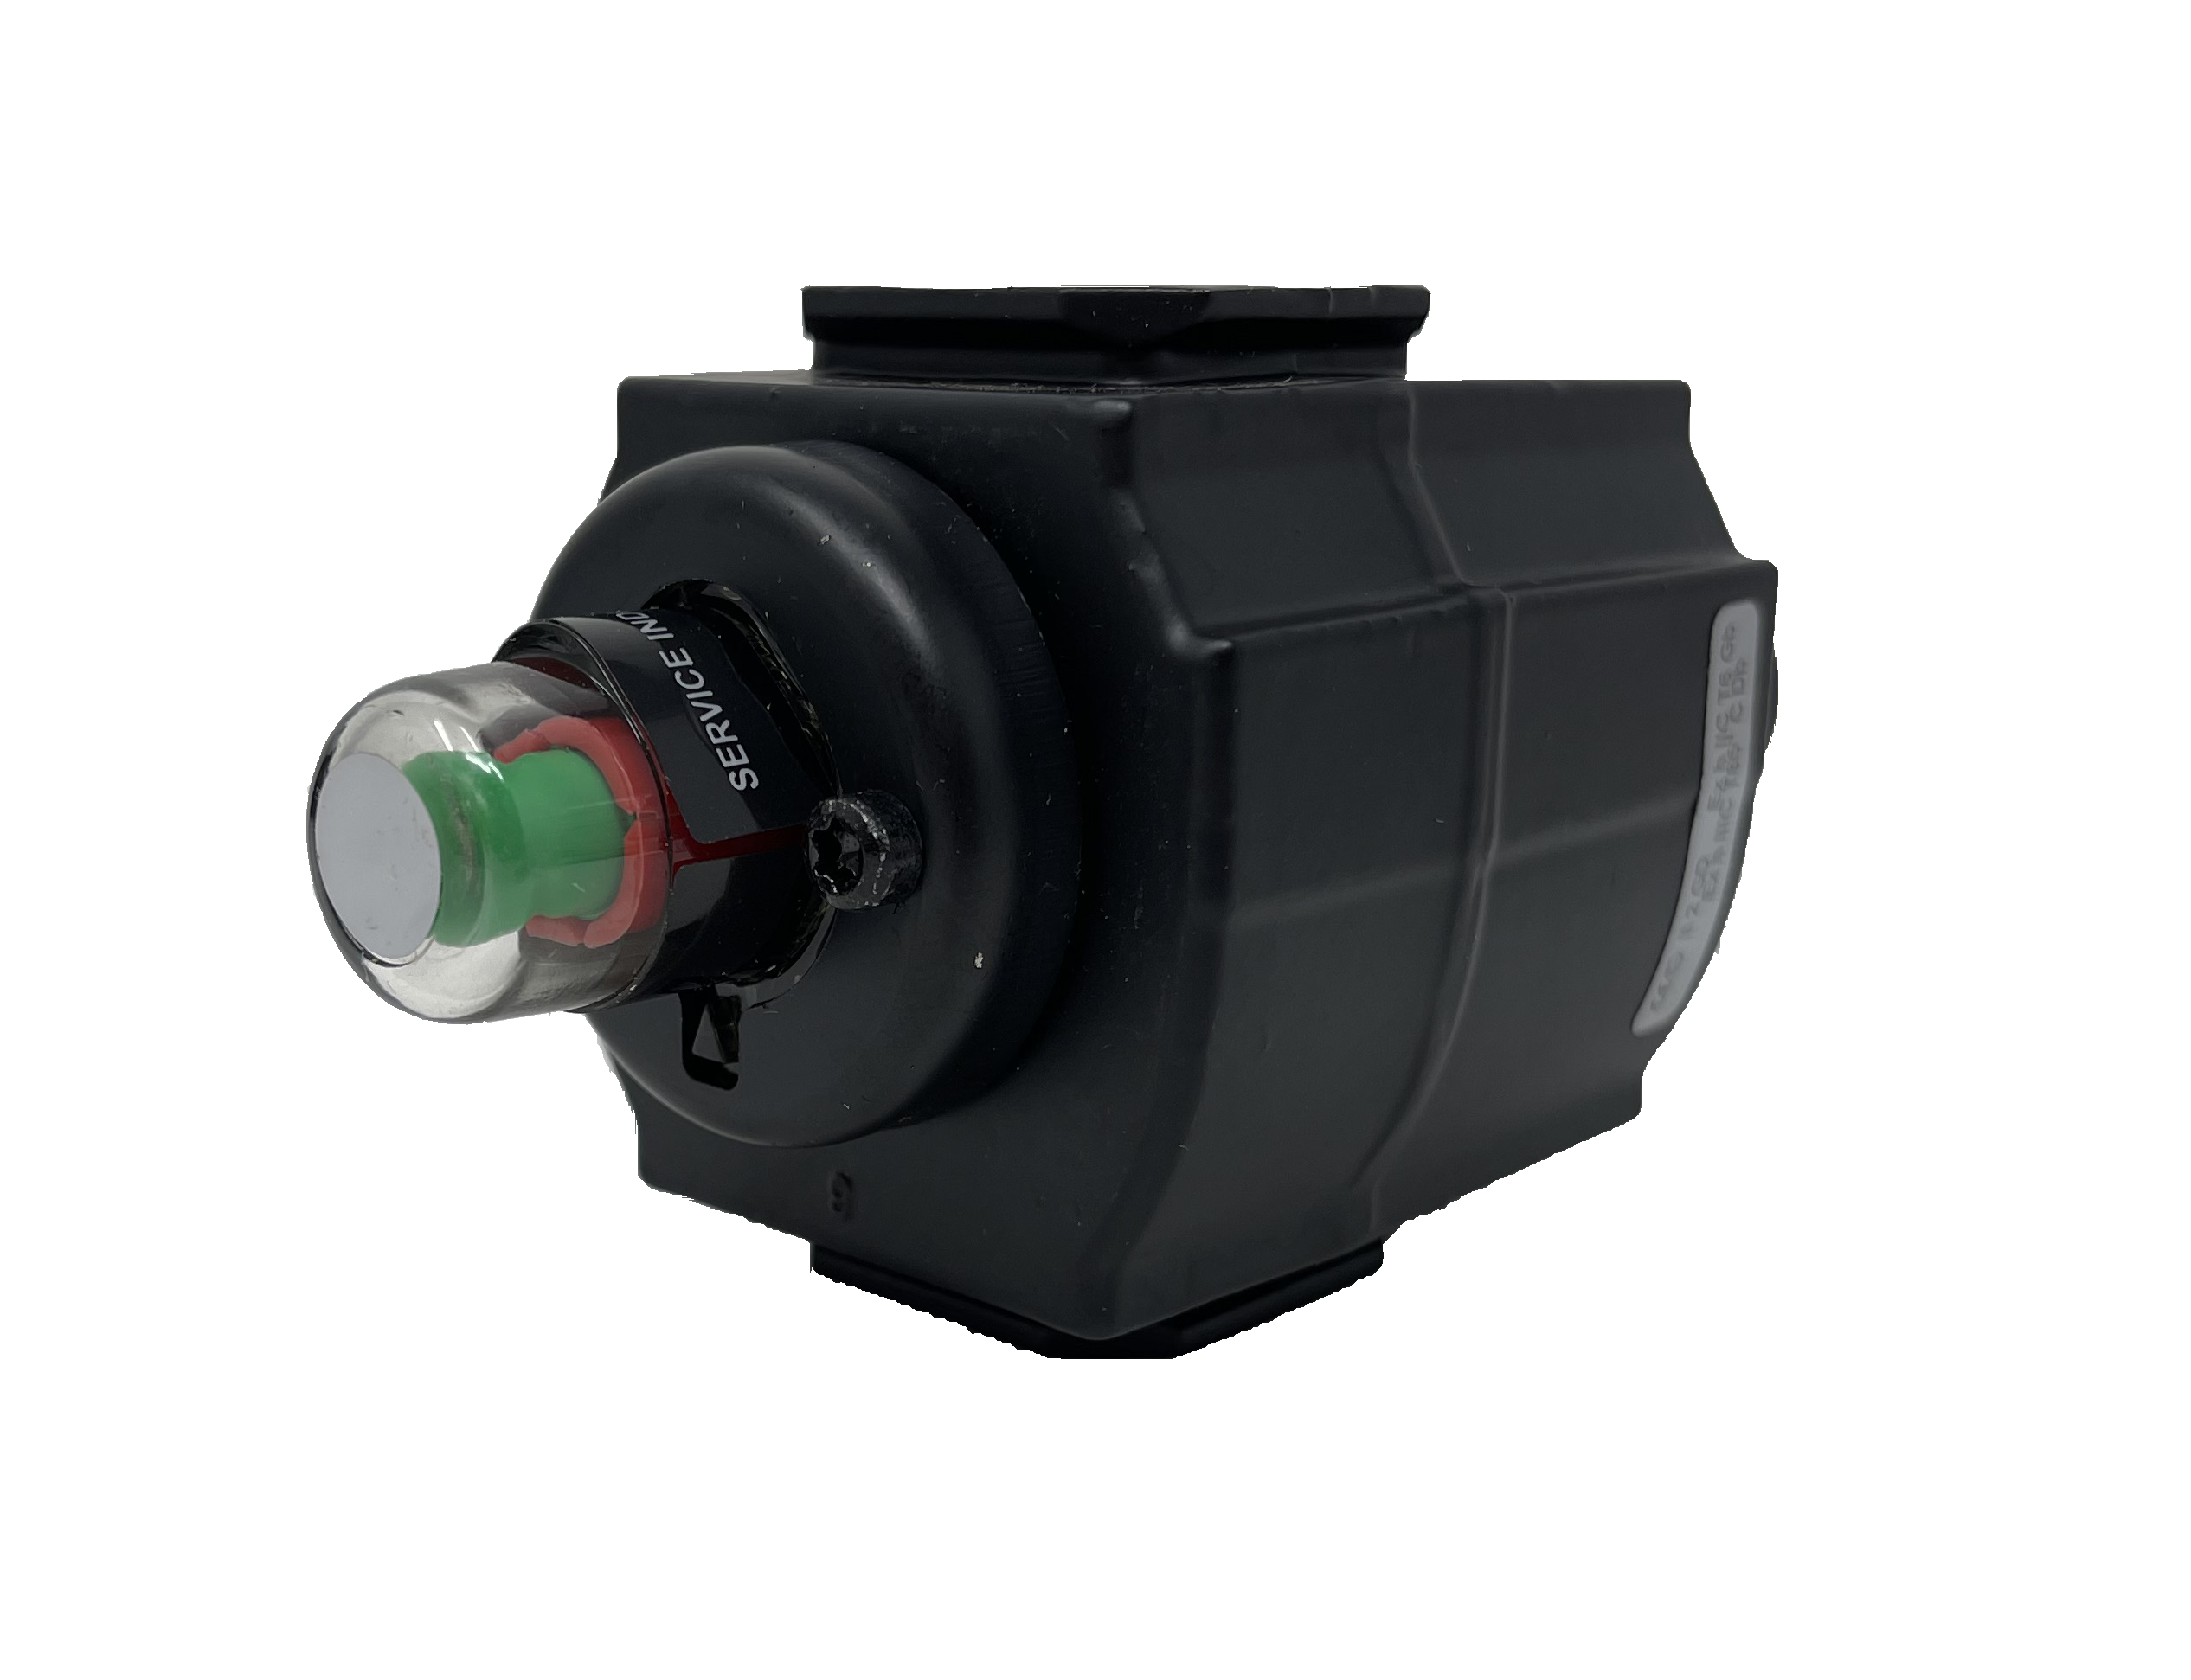 F73C-2AD-QD0 : Norgren Excelon Coalescing Filter, 1/4" NPT, With Mechanical Indicator, Manual Drain, Short Metal Bowl